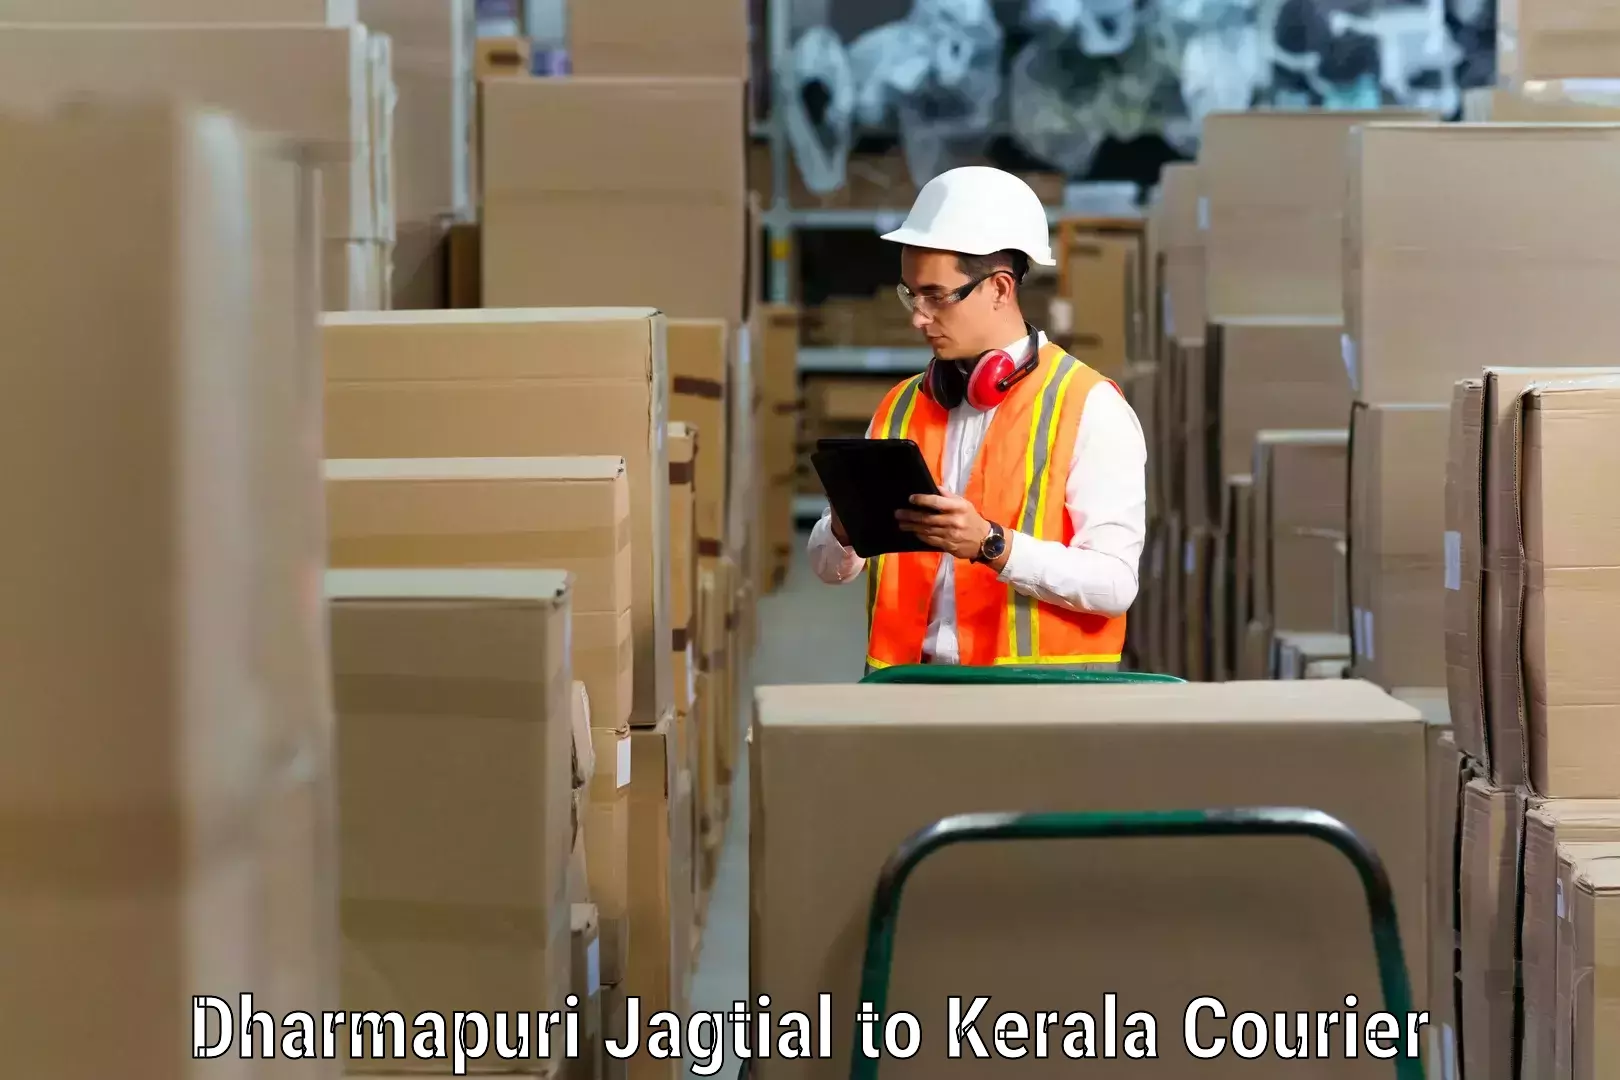 Furniture moving experts Dharmapuri Jagtial to Mahe